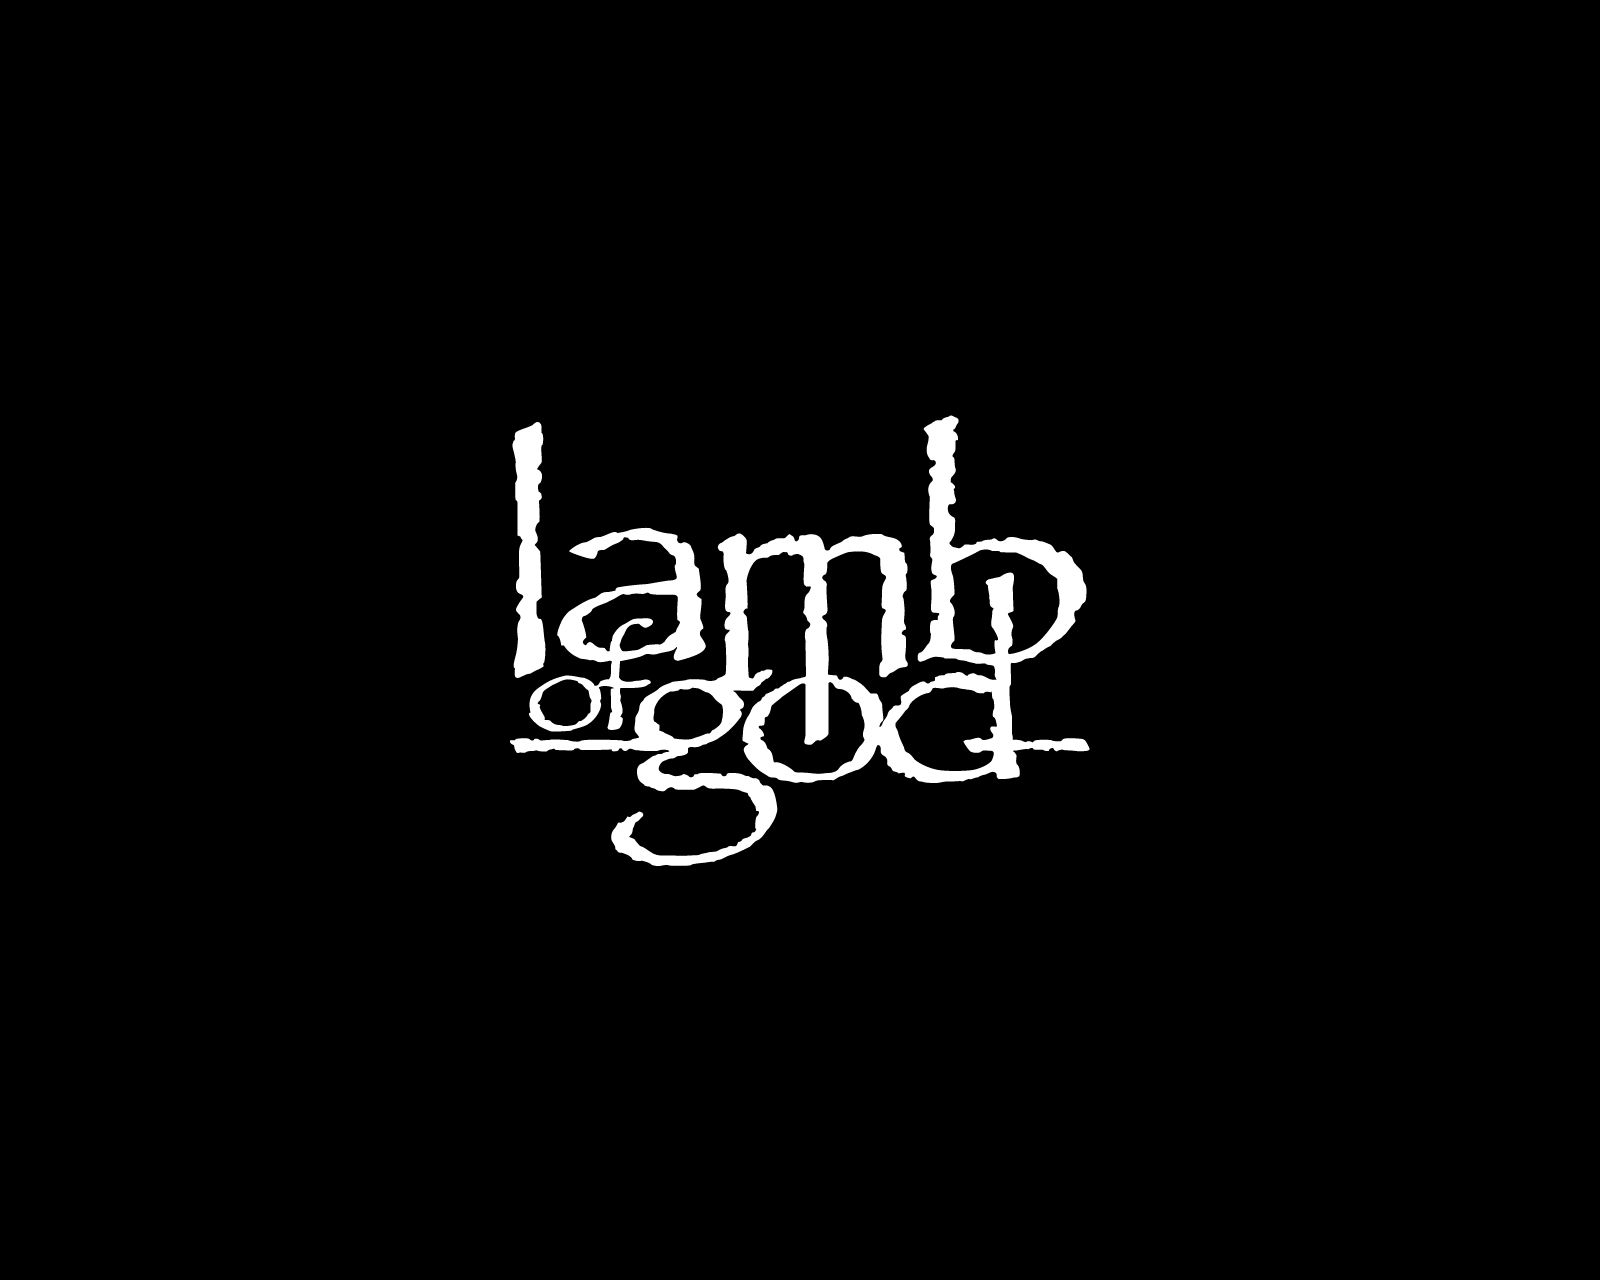 HD wallpaper music, lamb of god, death metal, hard rock, heavy metal